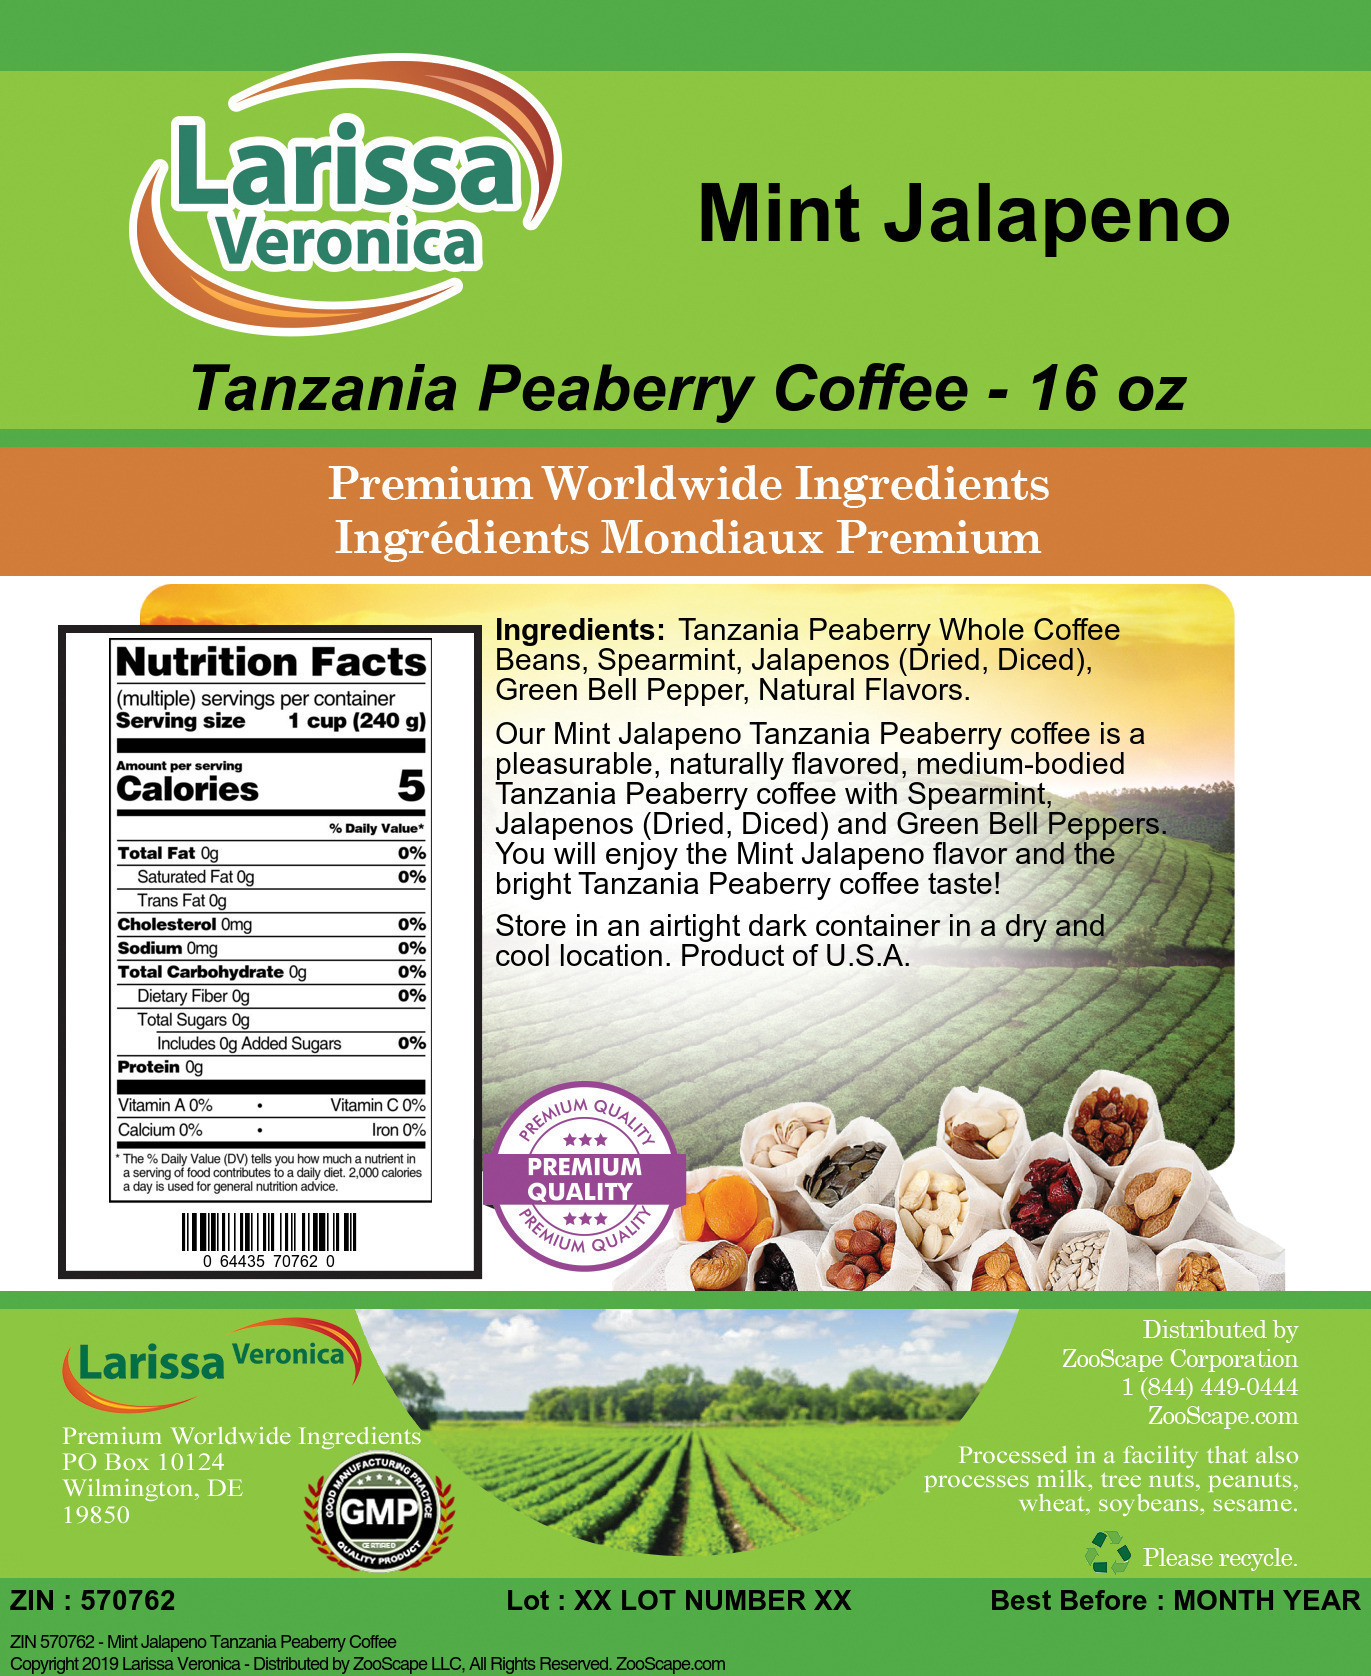 Mint Jalapeno Tanzania Peaberry Coffee - Label